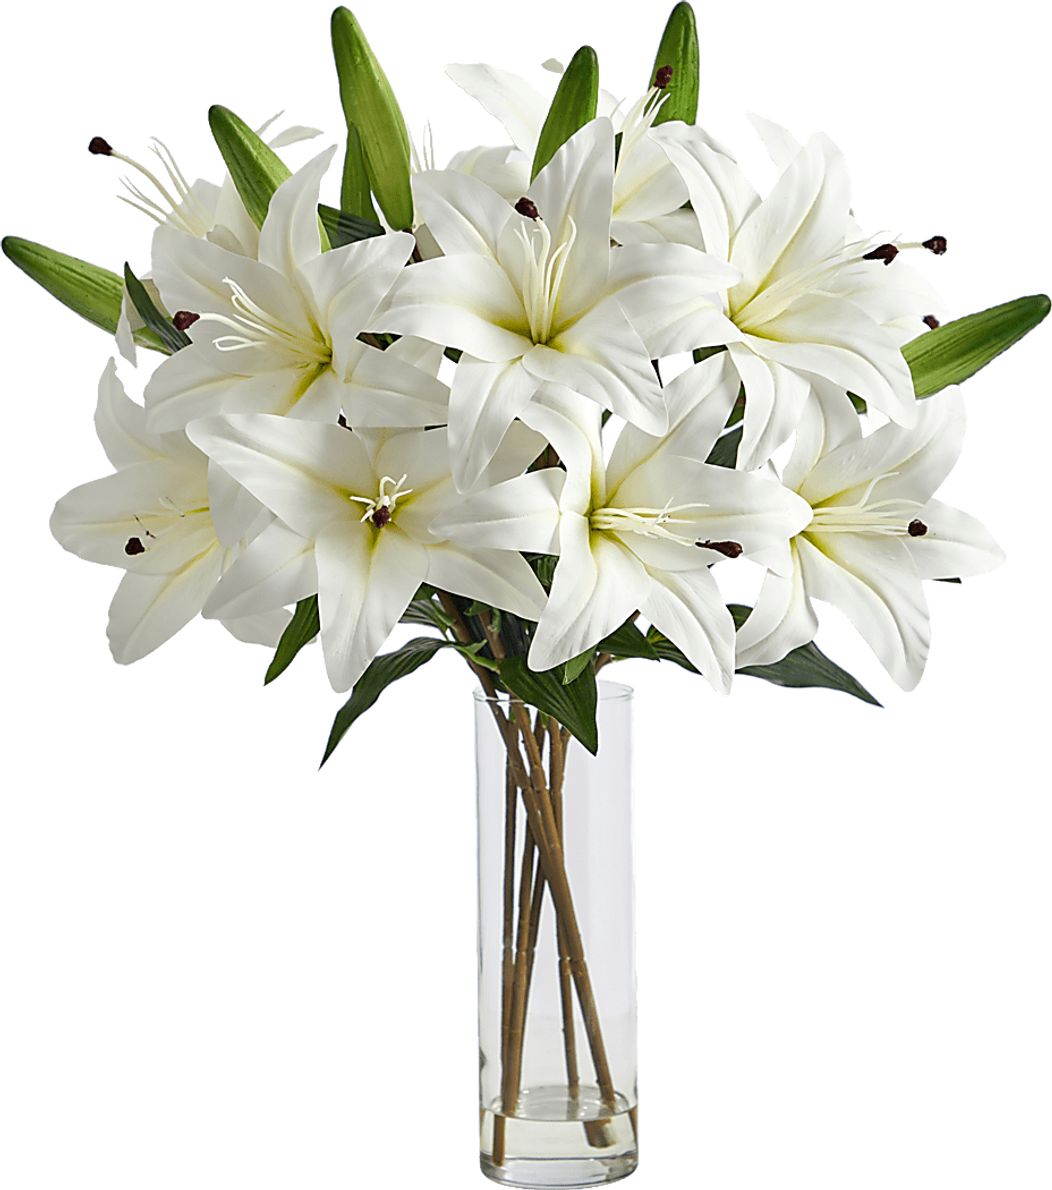 Harcross White Floral Arrangement with Vase